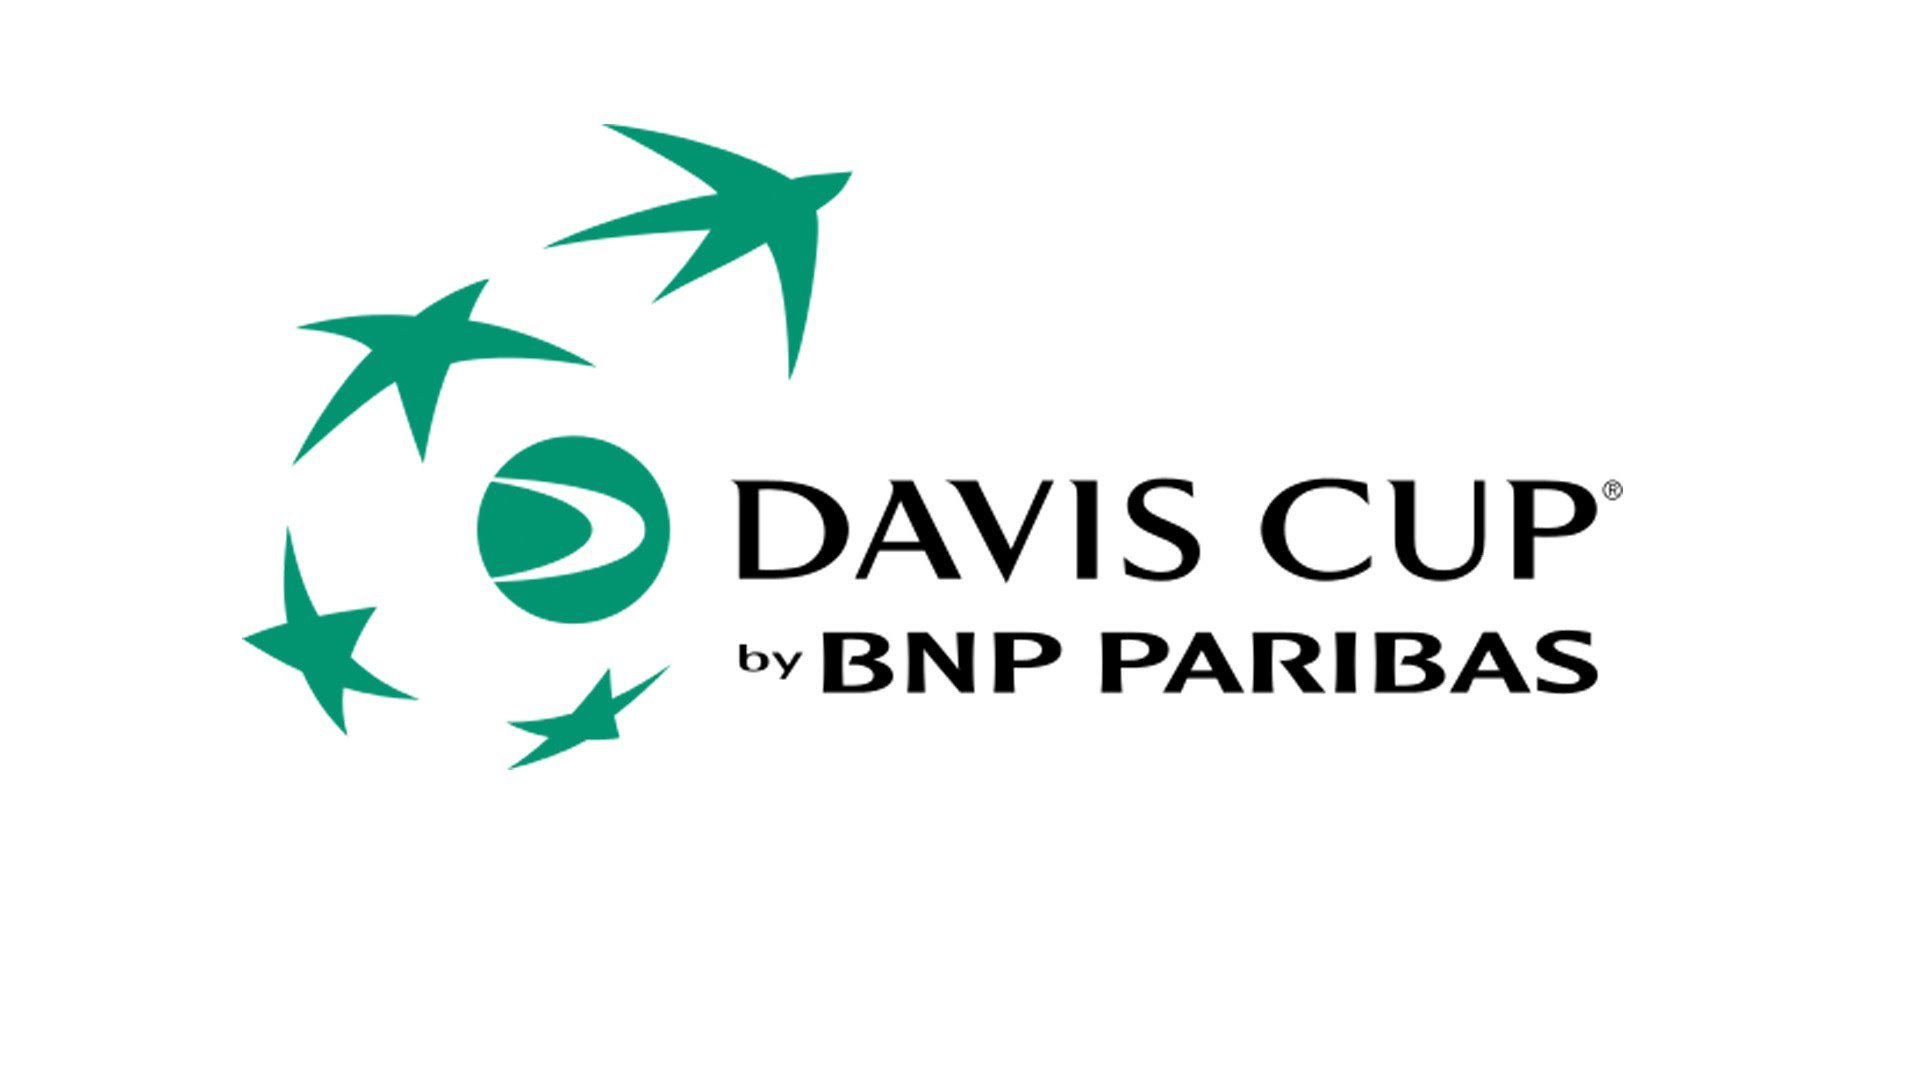 Apostas em Bitcoin na Copa Davis